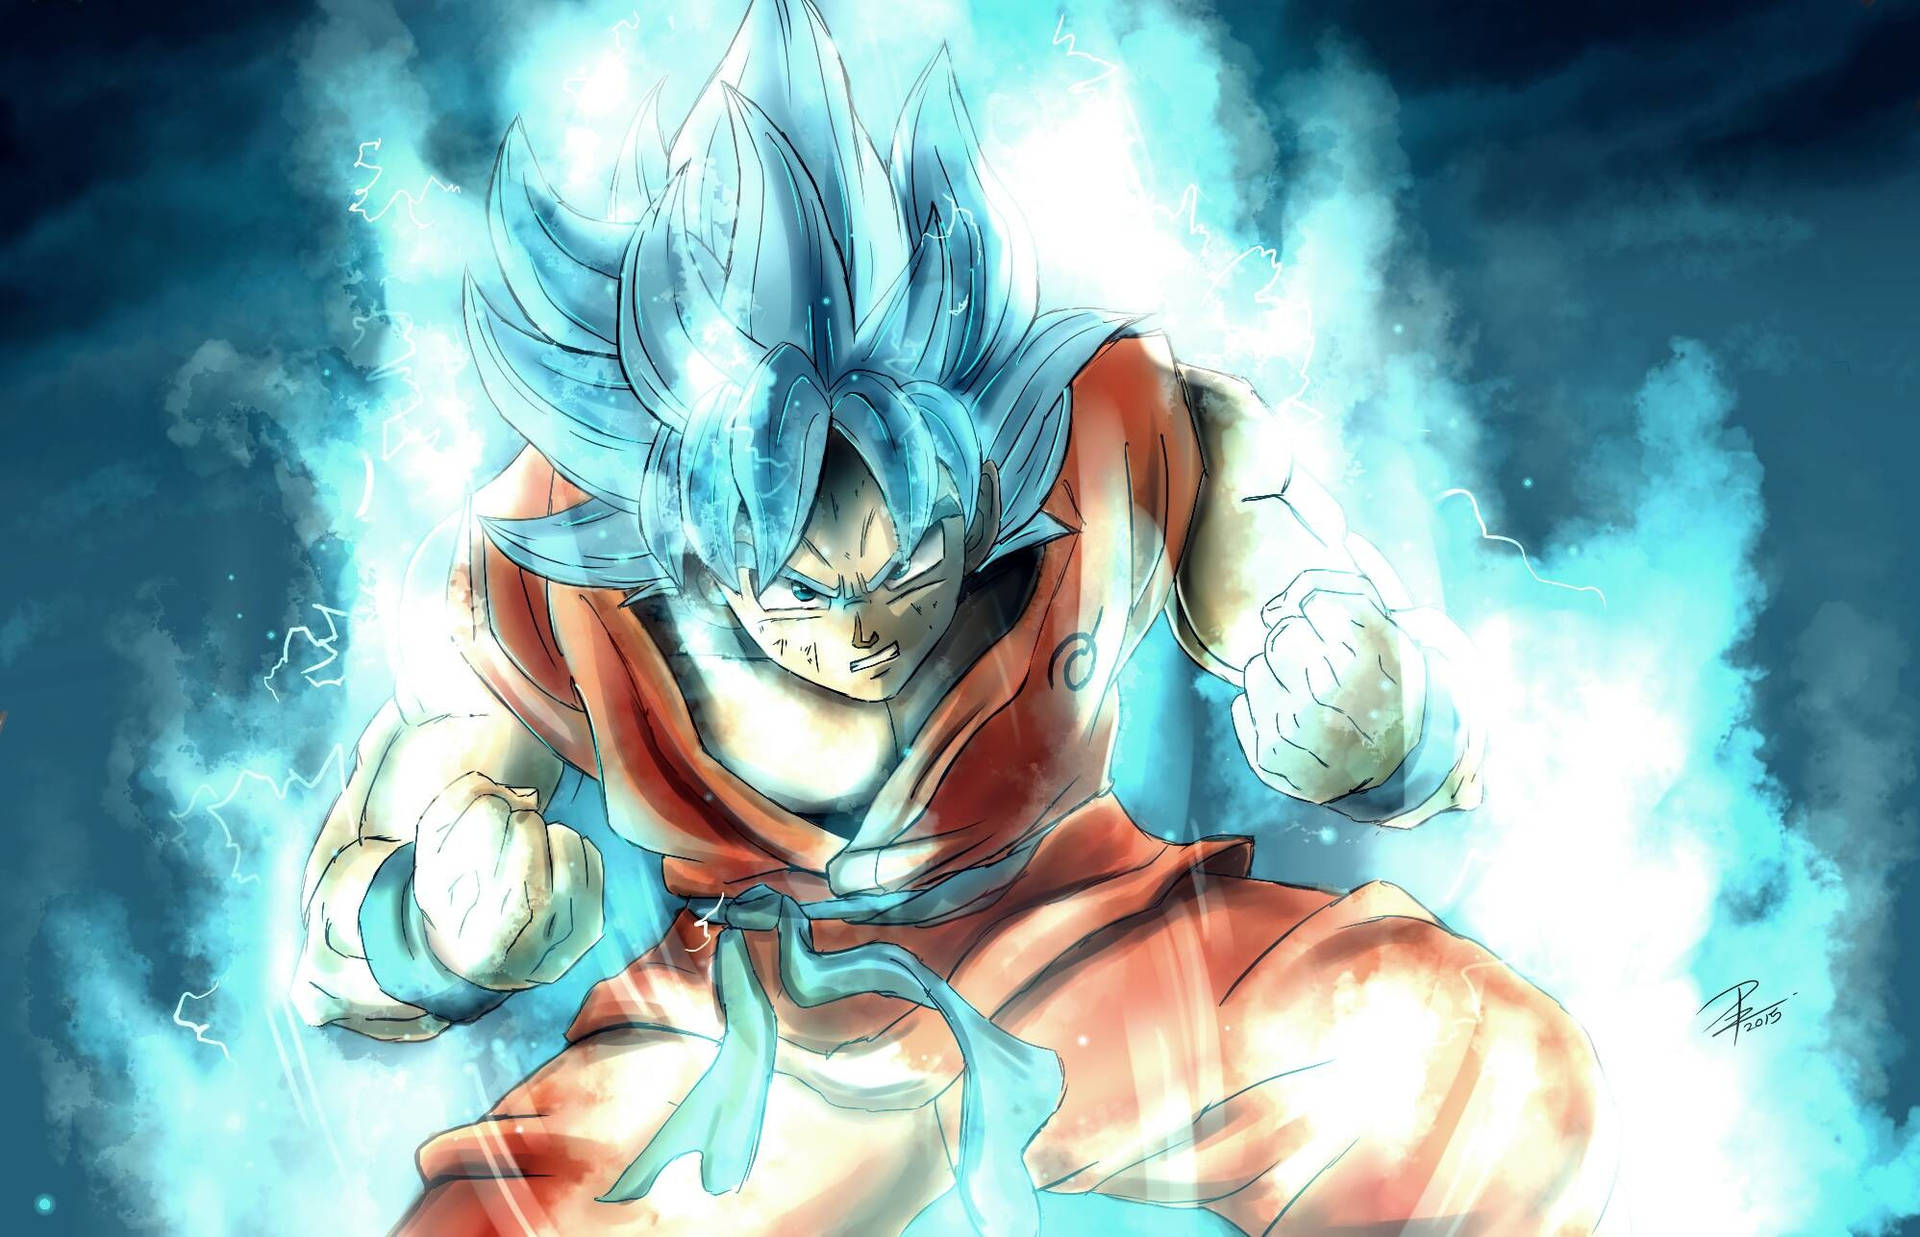 Goku Super Saiyan Blue Wallpaper